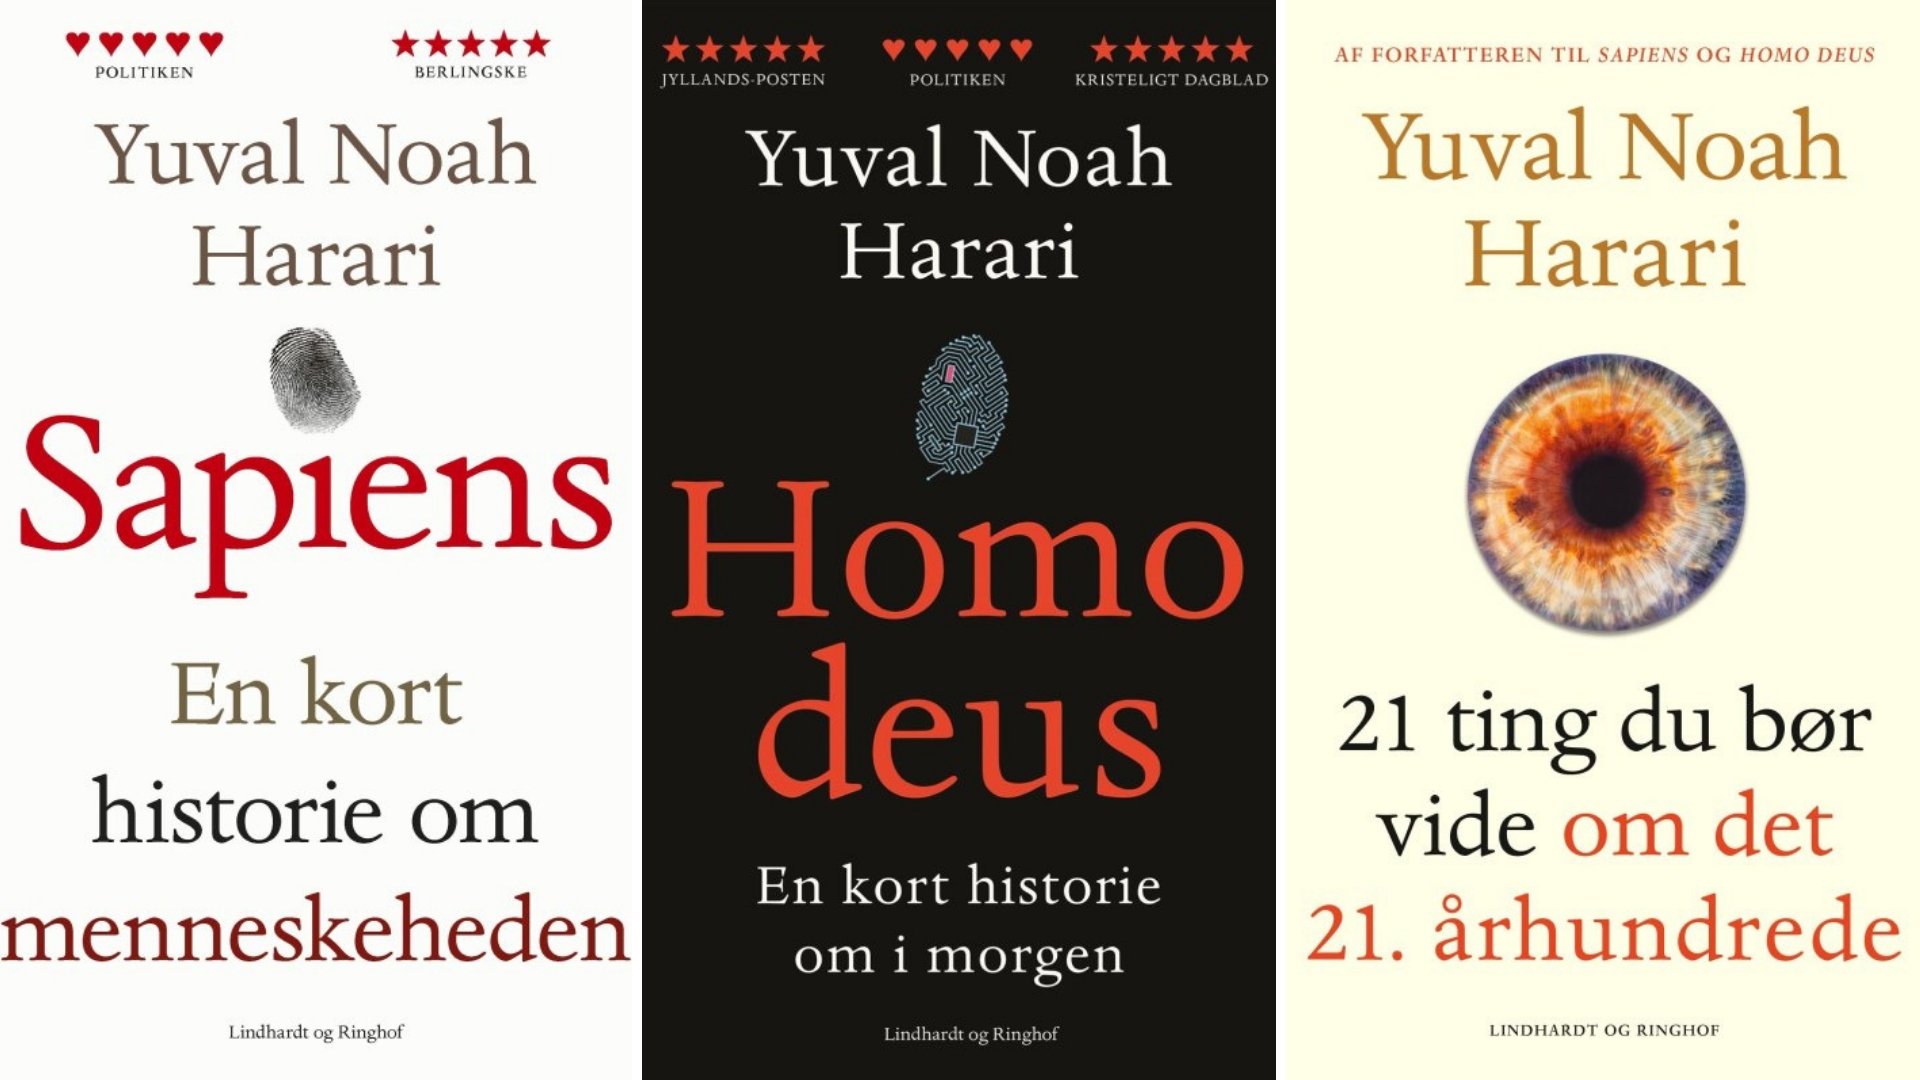 Yuval Noah Harari, Sapiens, Homo deus, 21 ting du bør vide om det 21. århundrede